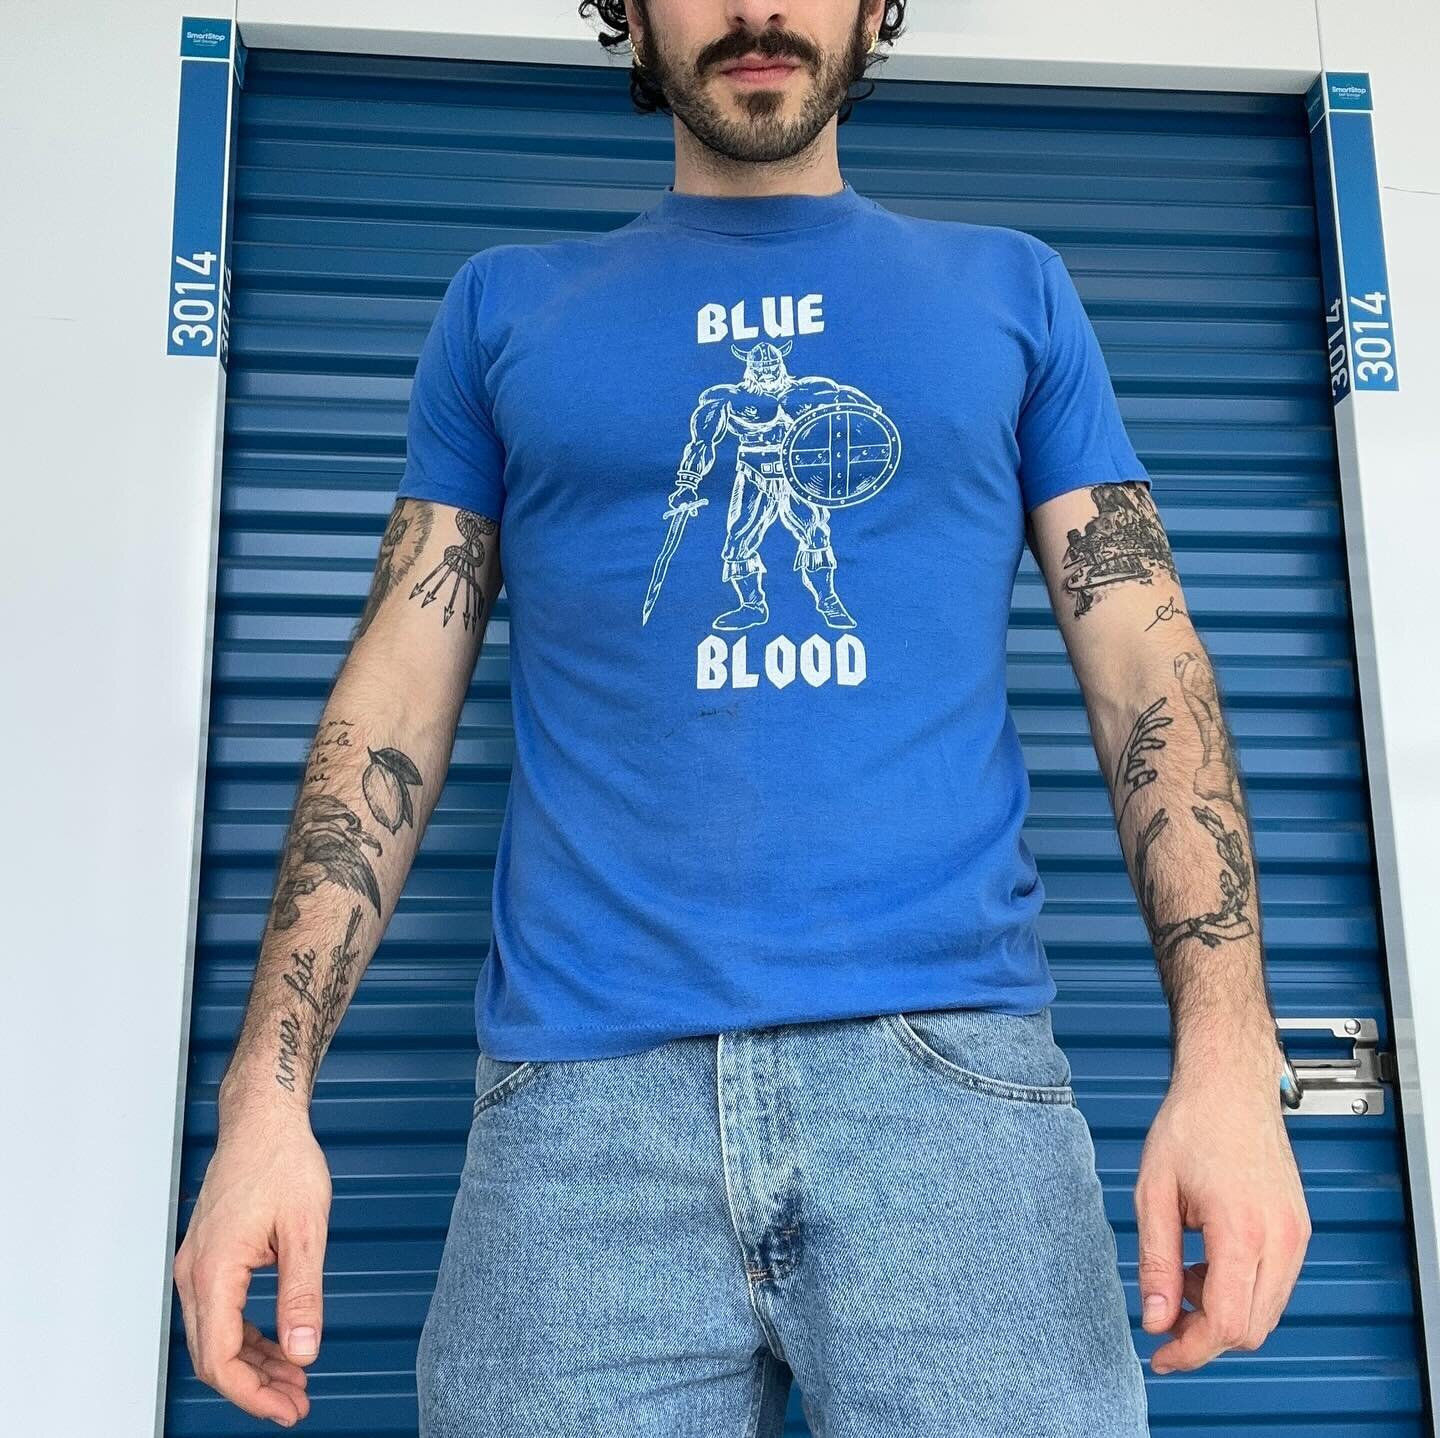 Blue blood.